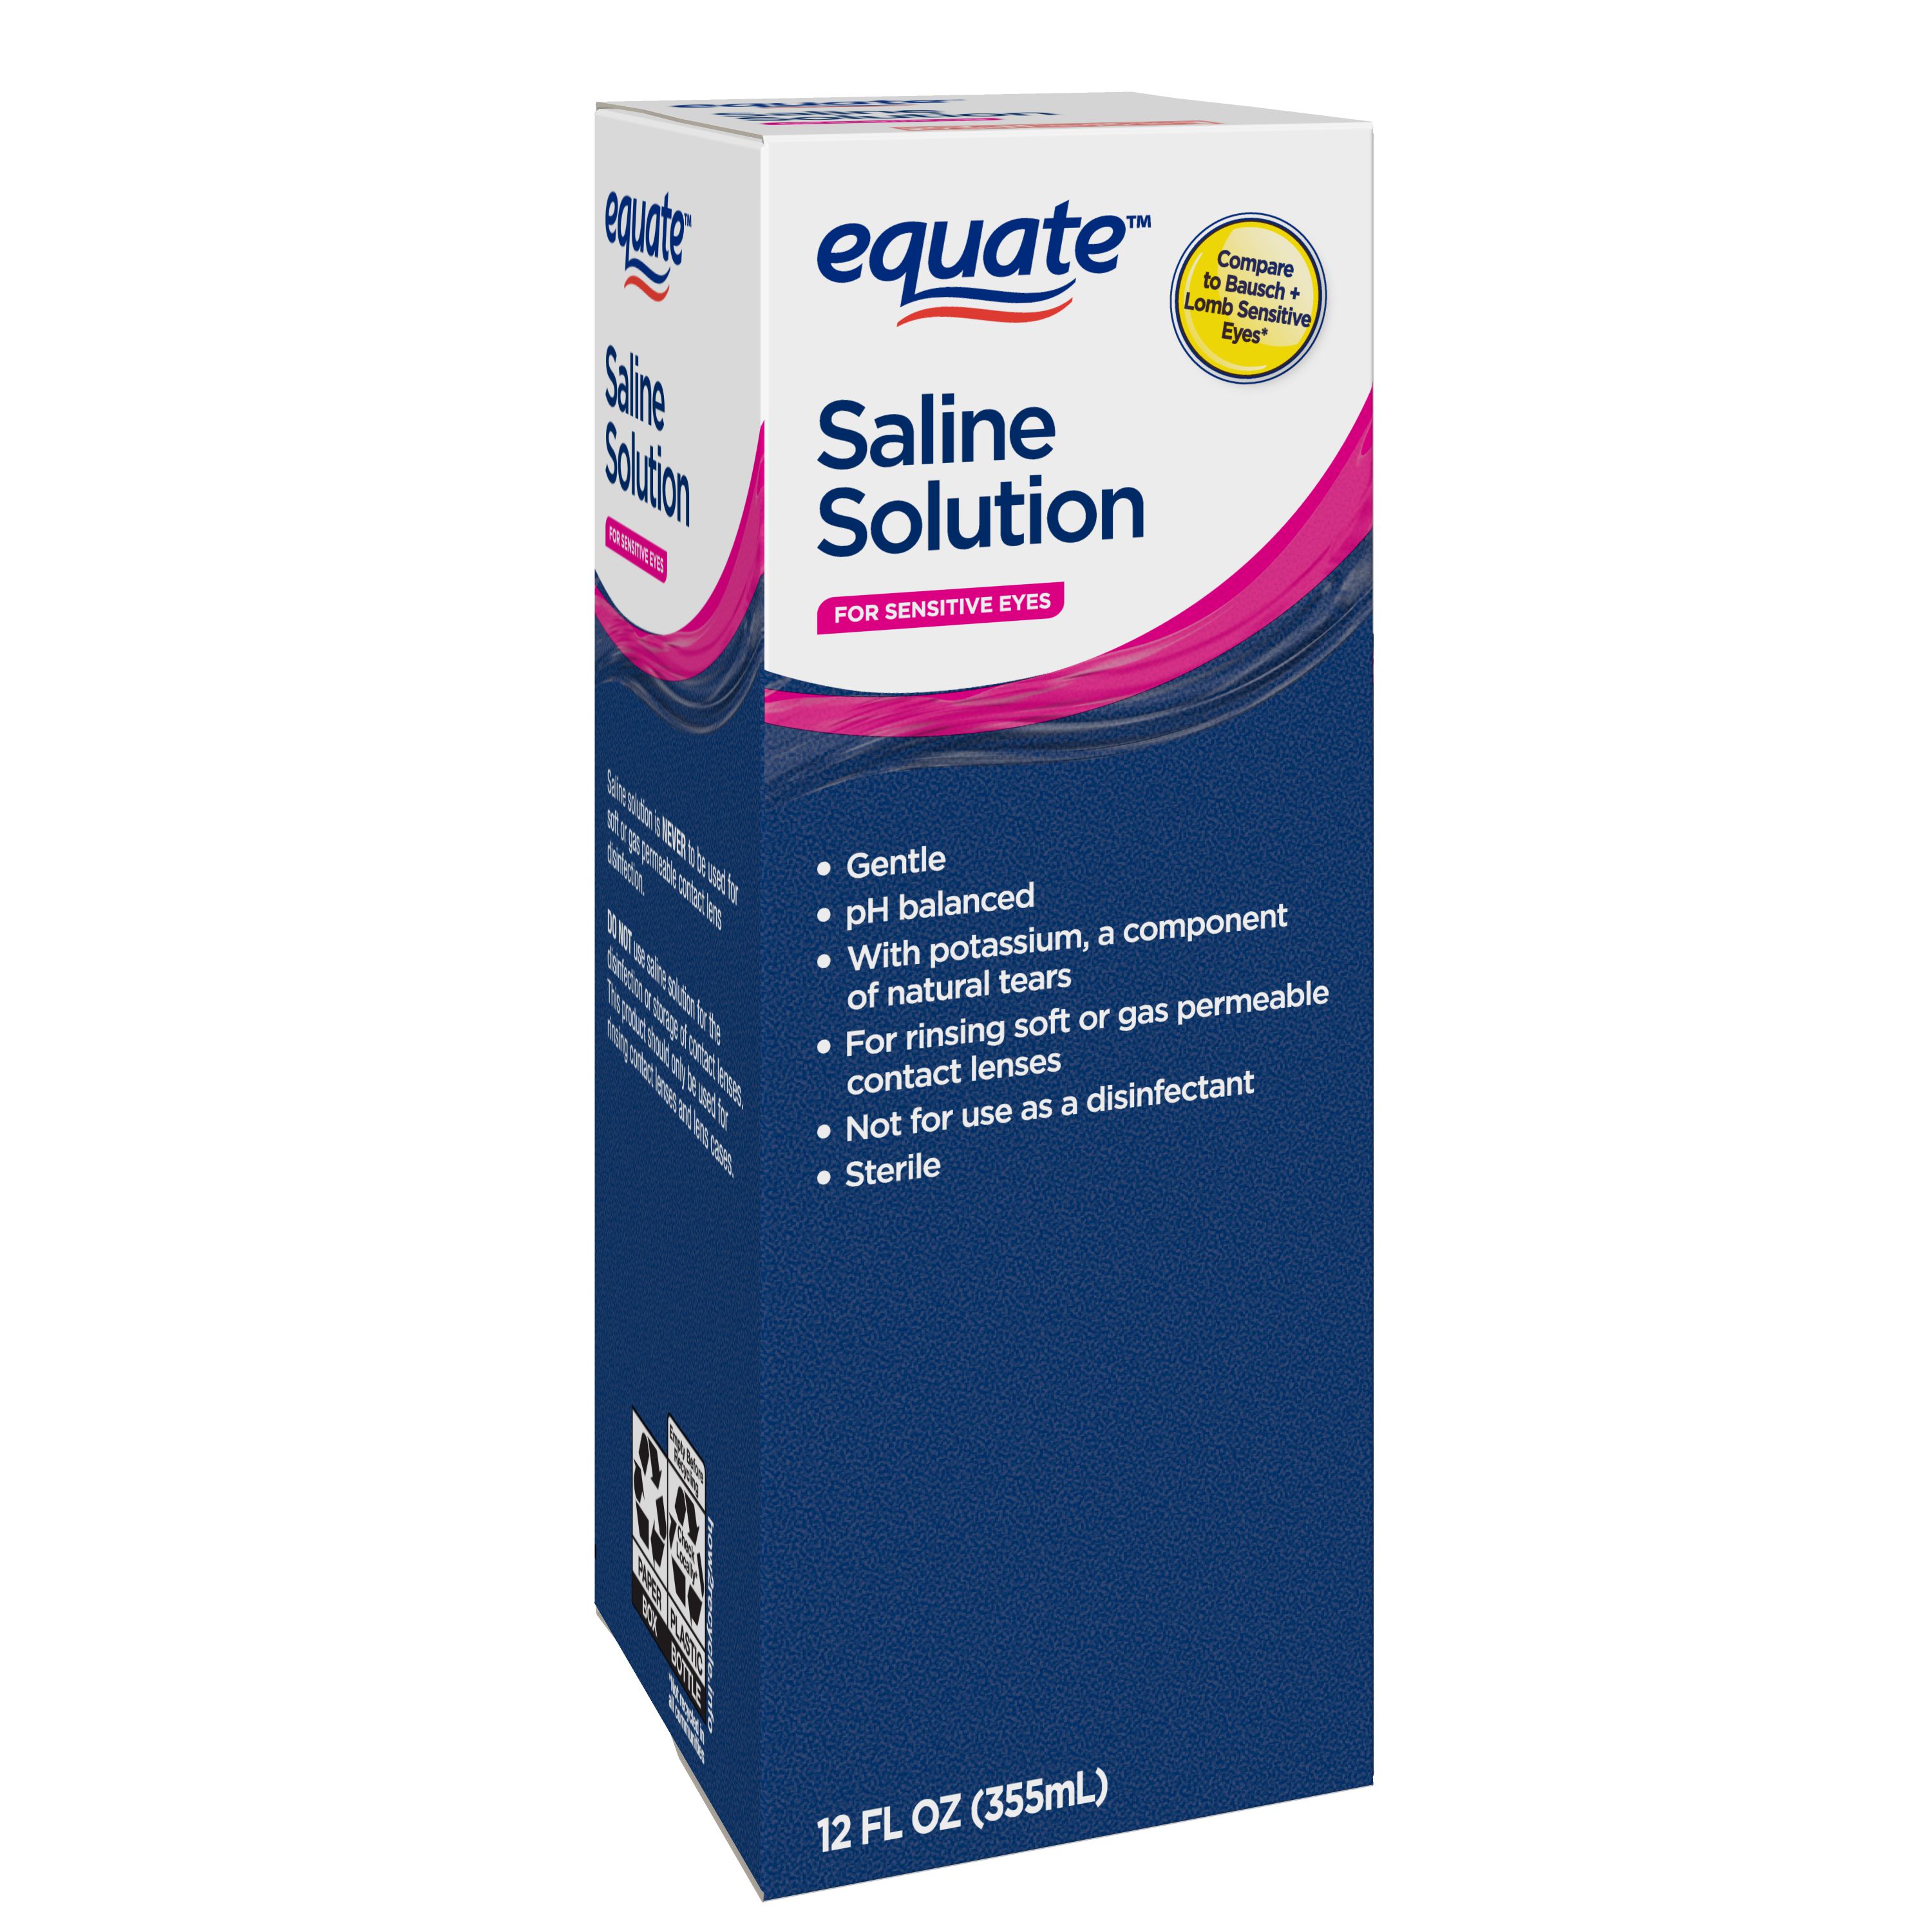 Equate Sensitive Eyes Saline Solution for Contact Lenses, 12 fl oz - image 4 of 6